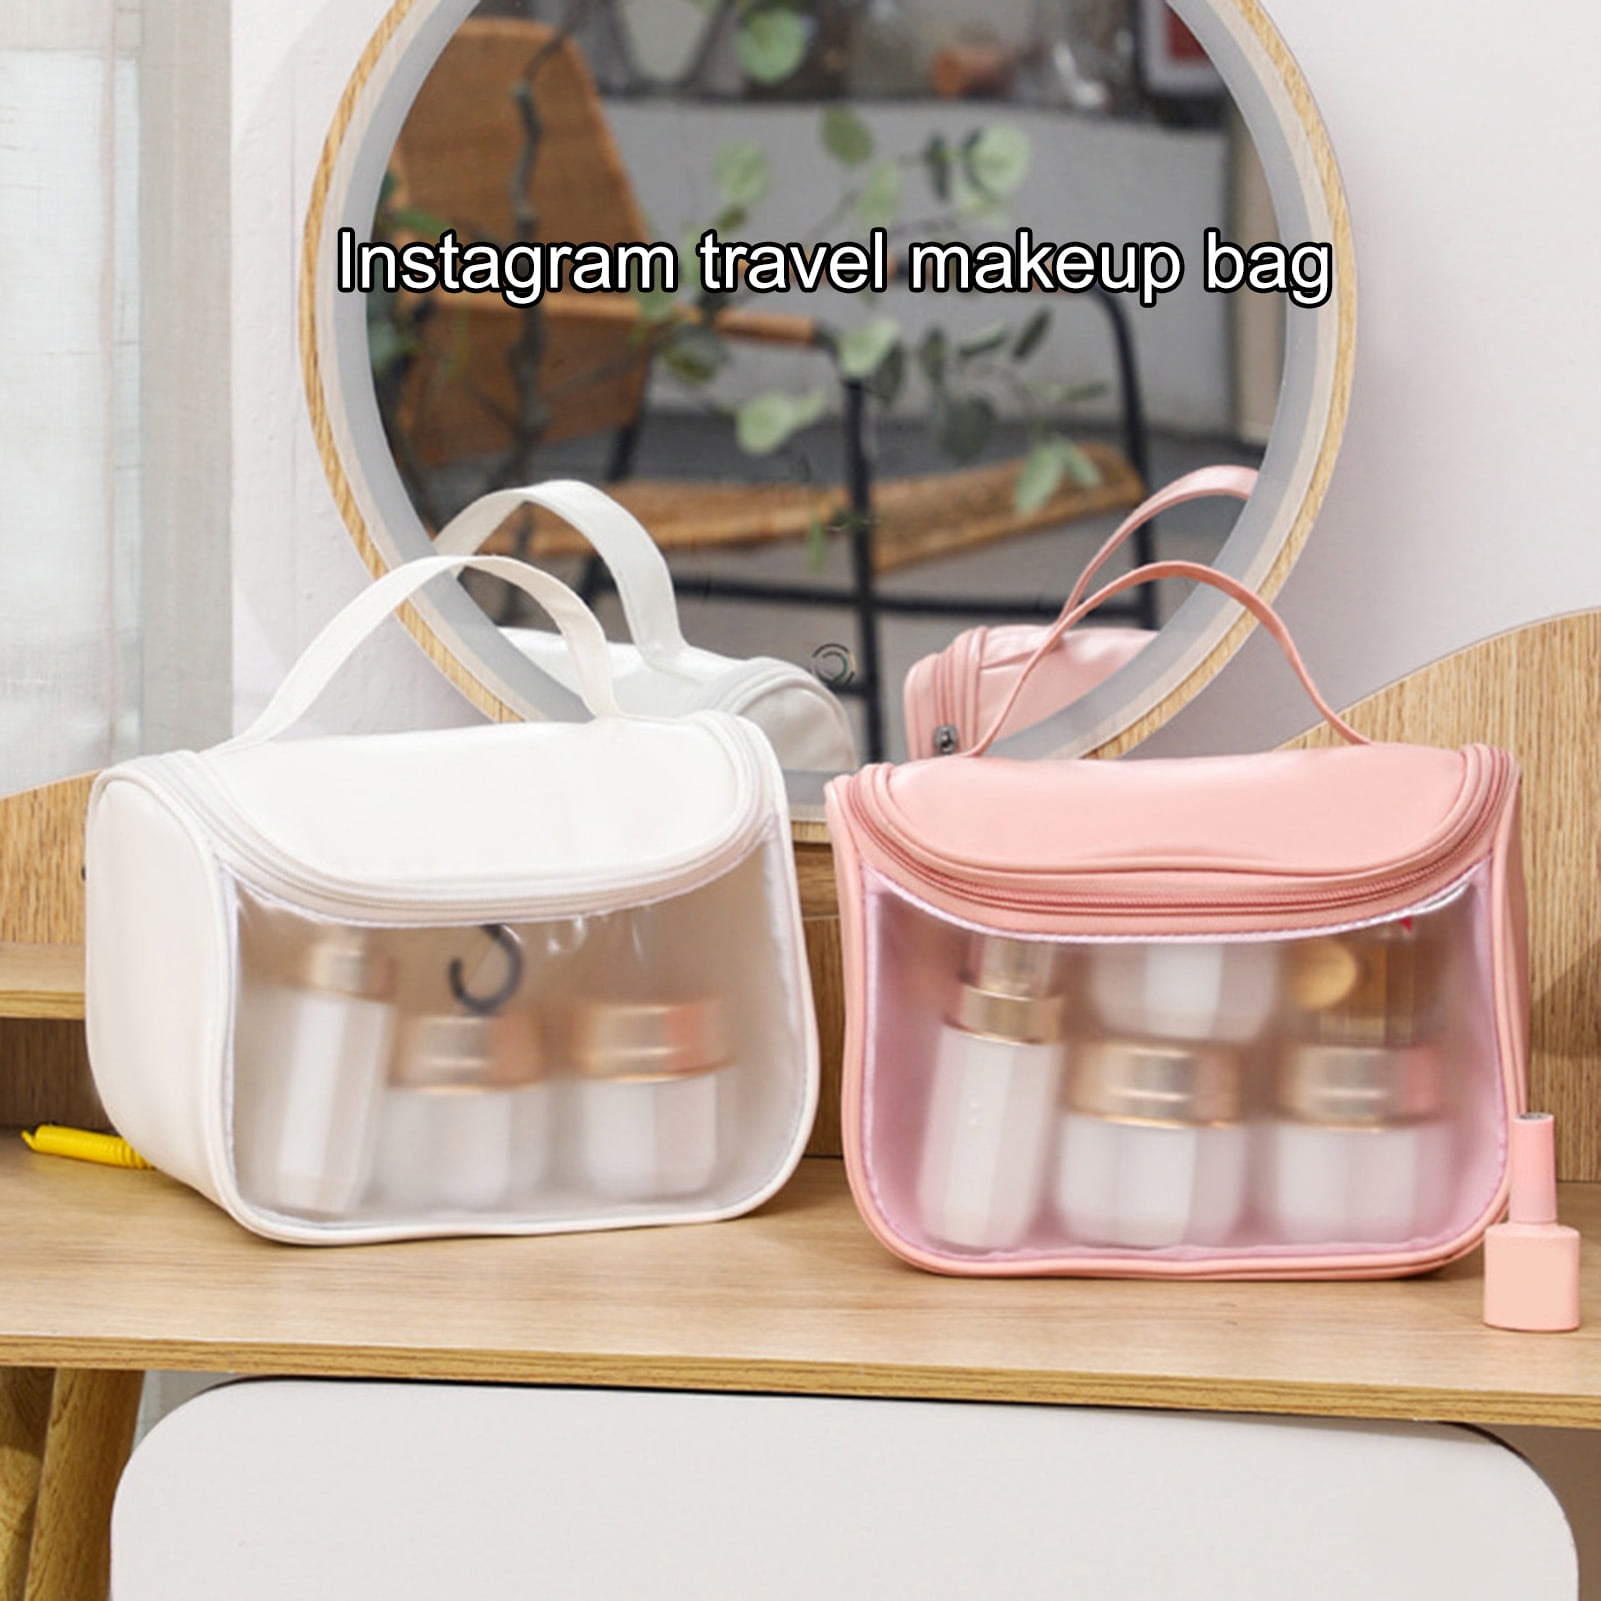 ComfiTime Makeup Bag – Cosmetic Bag, Travel Makeup Bag for Women, Makeup  Case, Large Makeup Organizer with Brush Holder and Adjustable Dividers